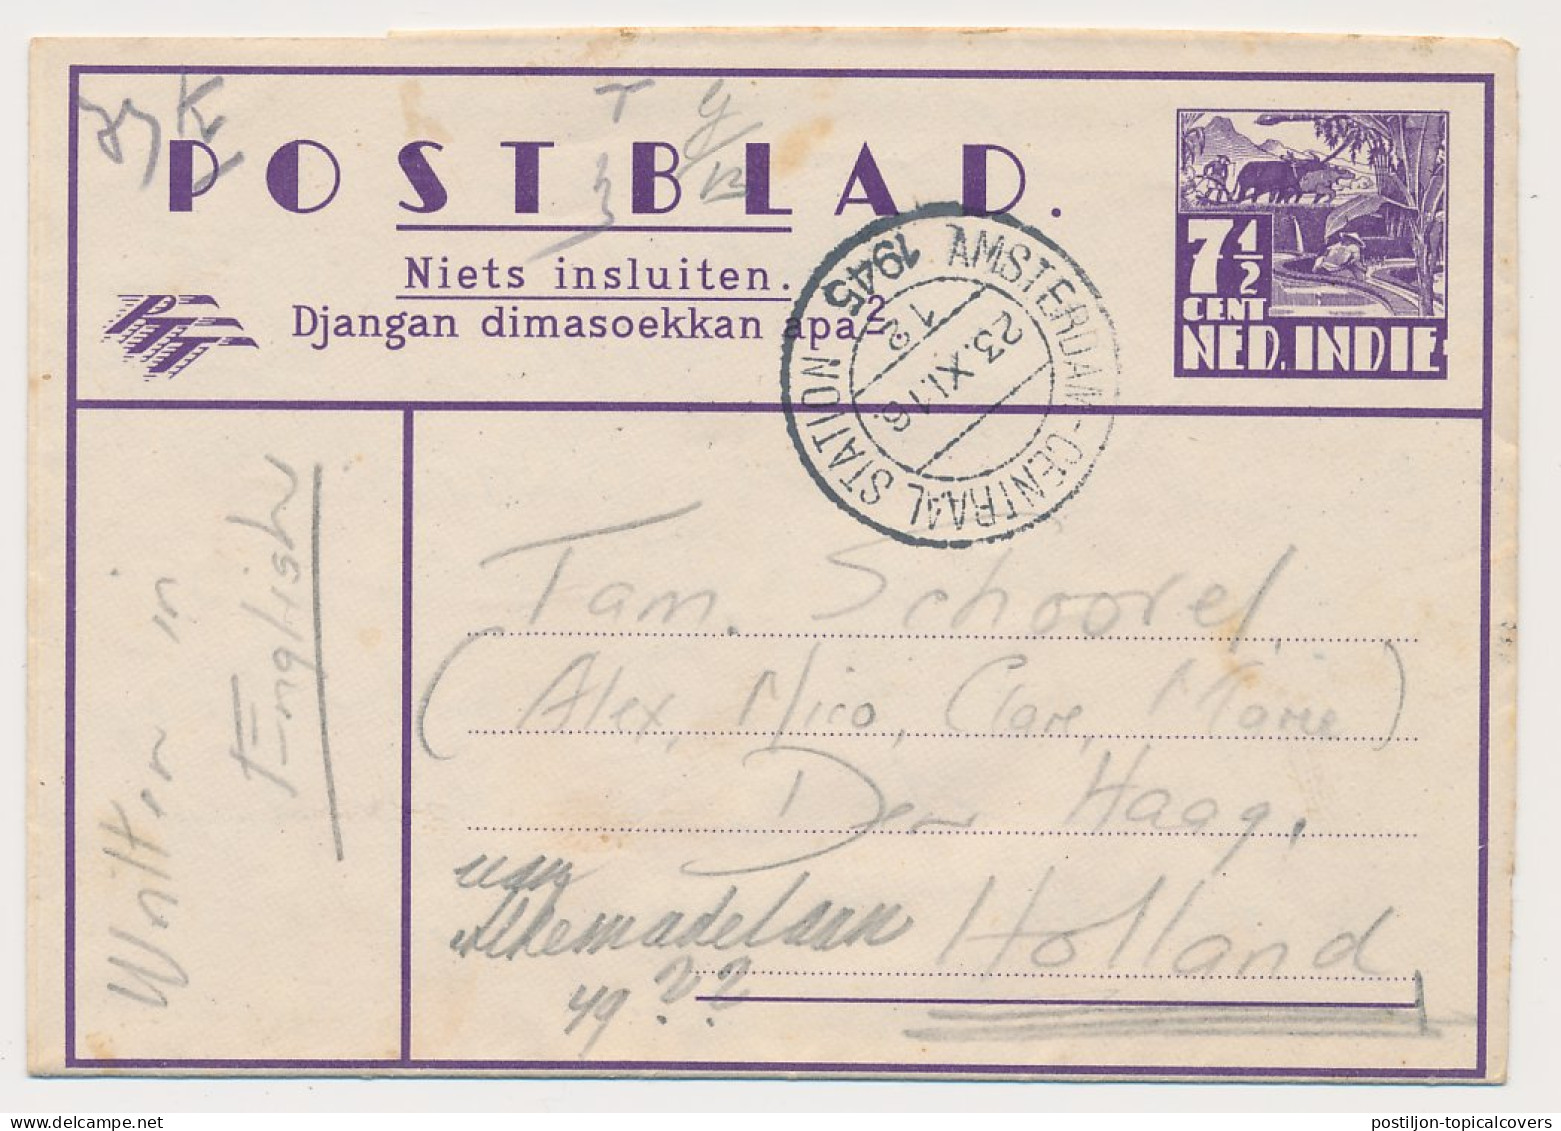 Postblad Camp Lampersari Semarang Neth. Indies - Den Haag 1945 - Indes Néerlandaises